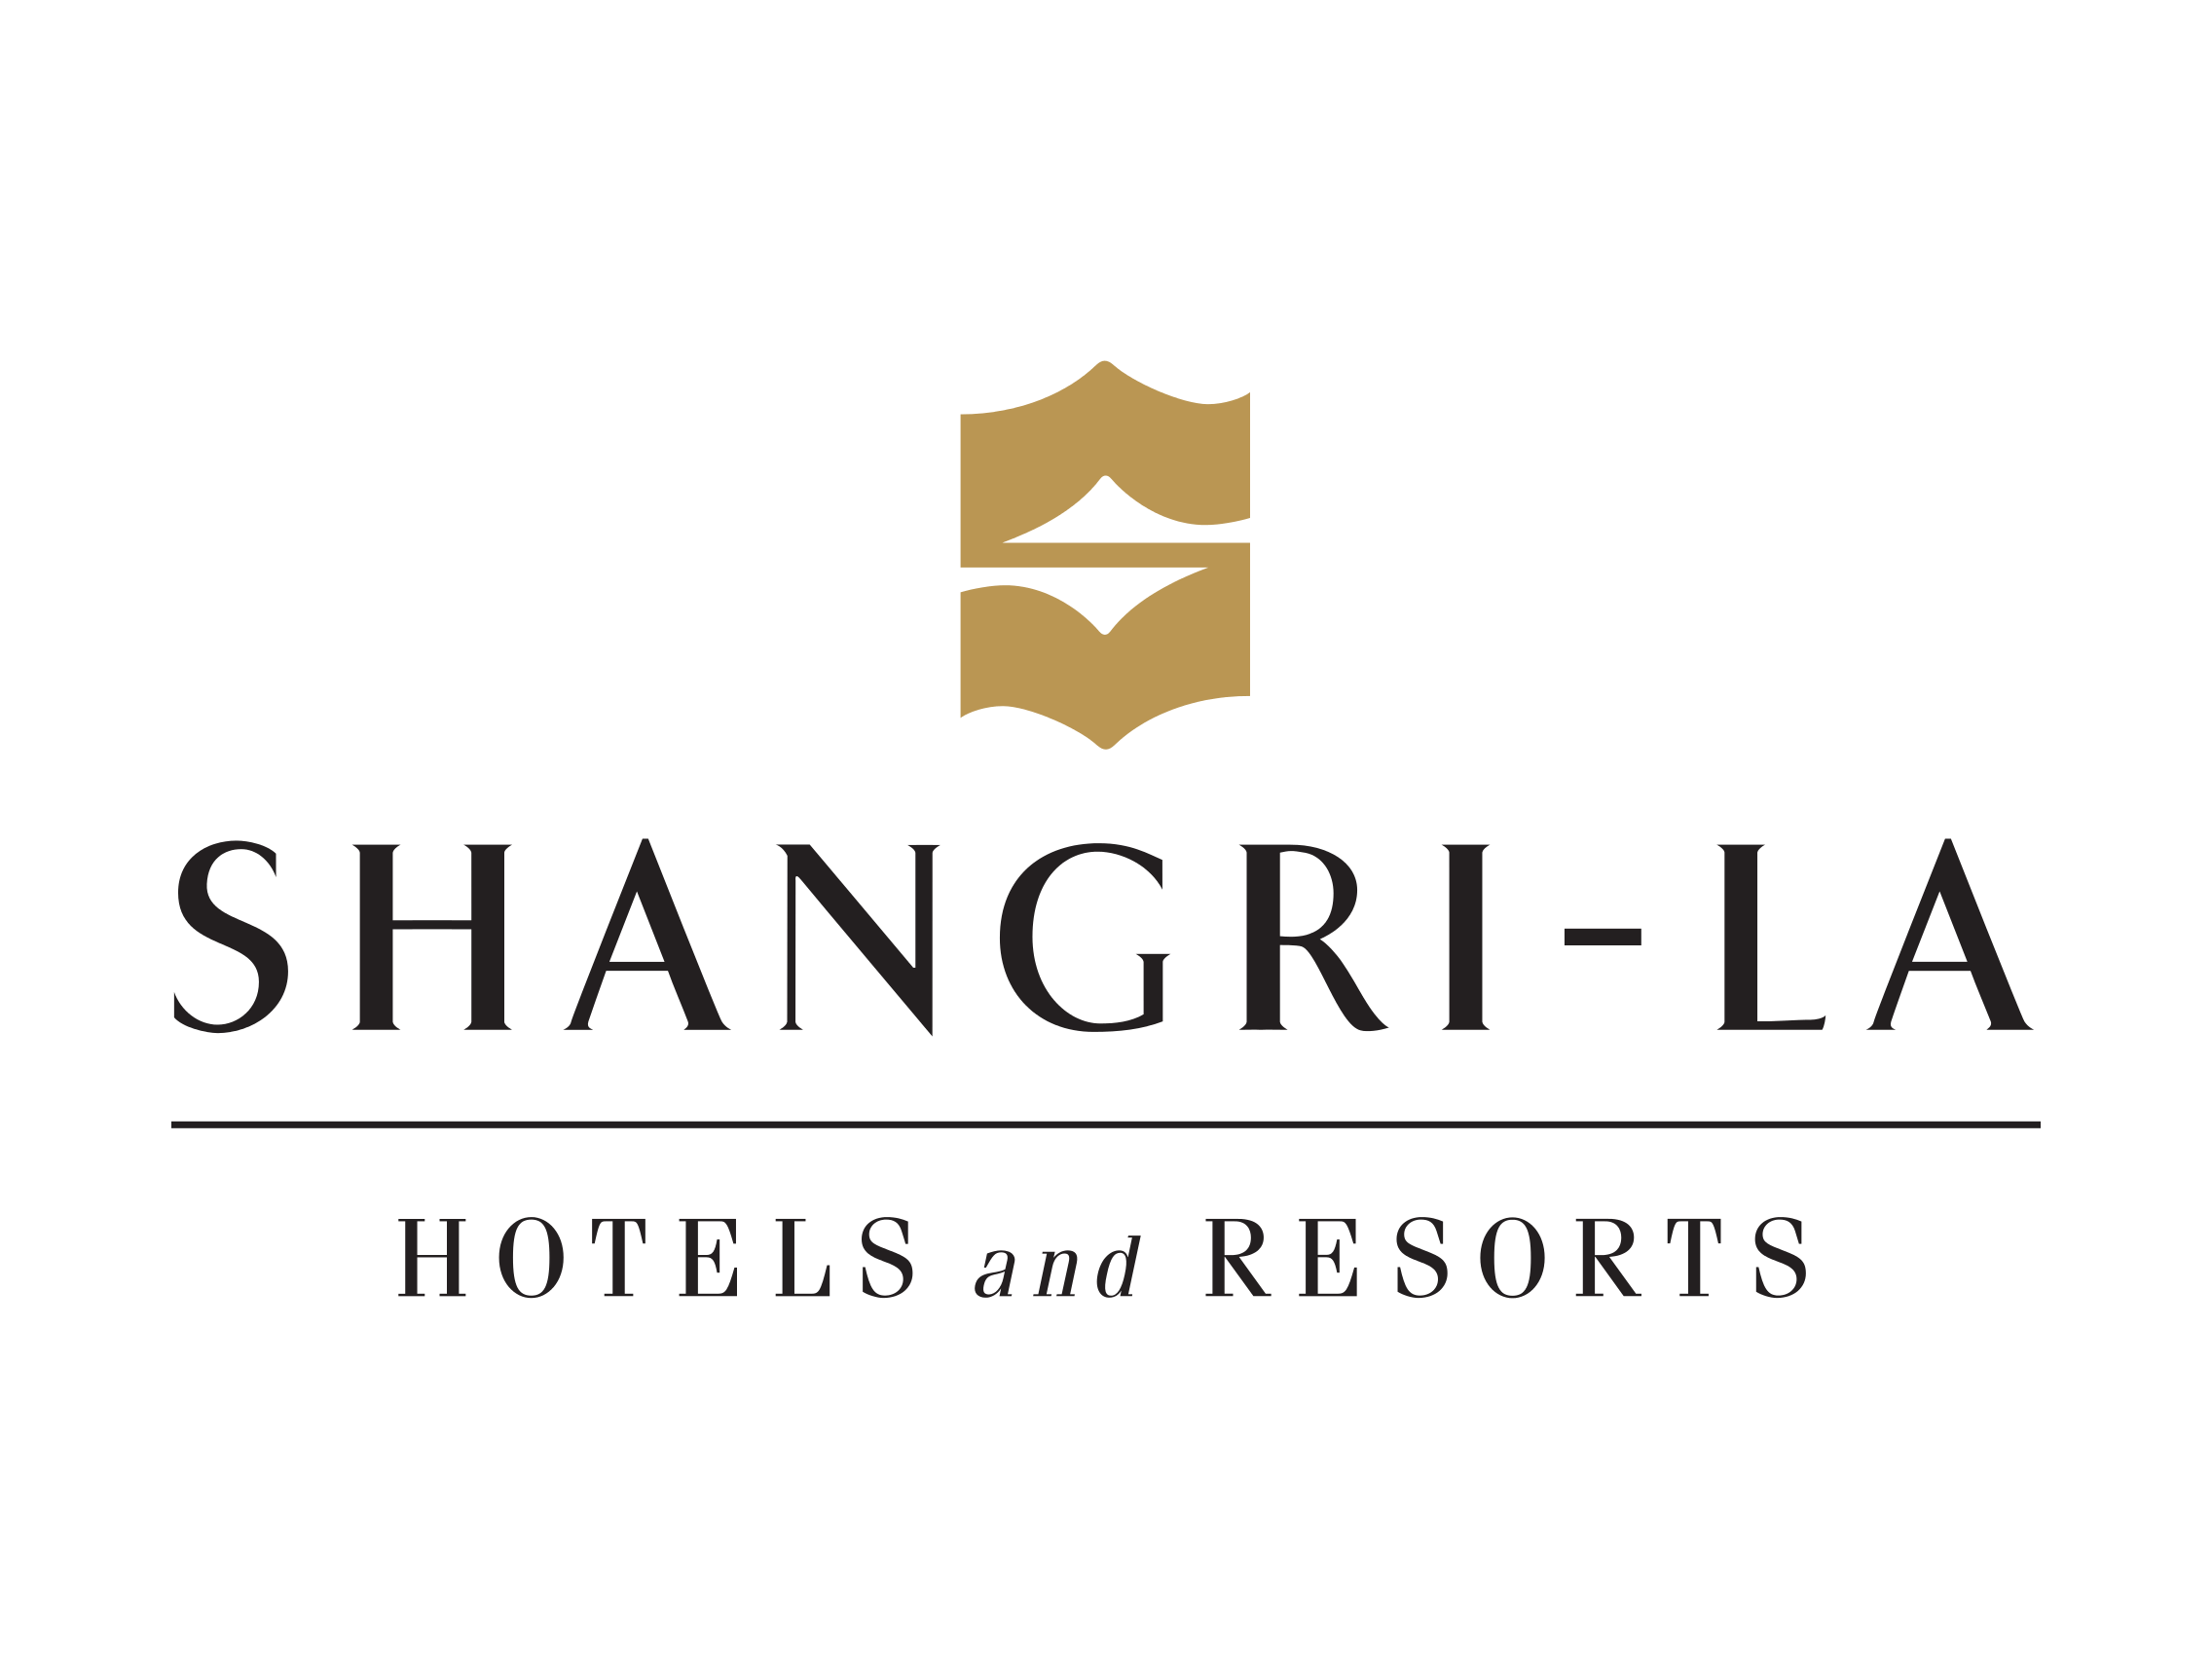 Hotel Logo - Shangri La Hotel Logo